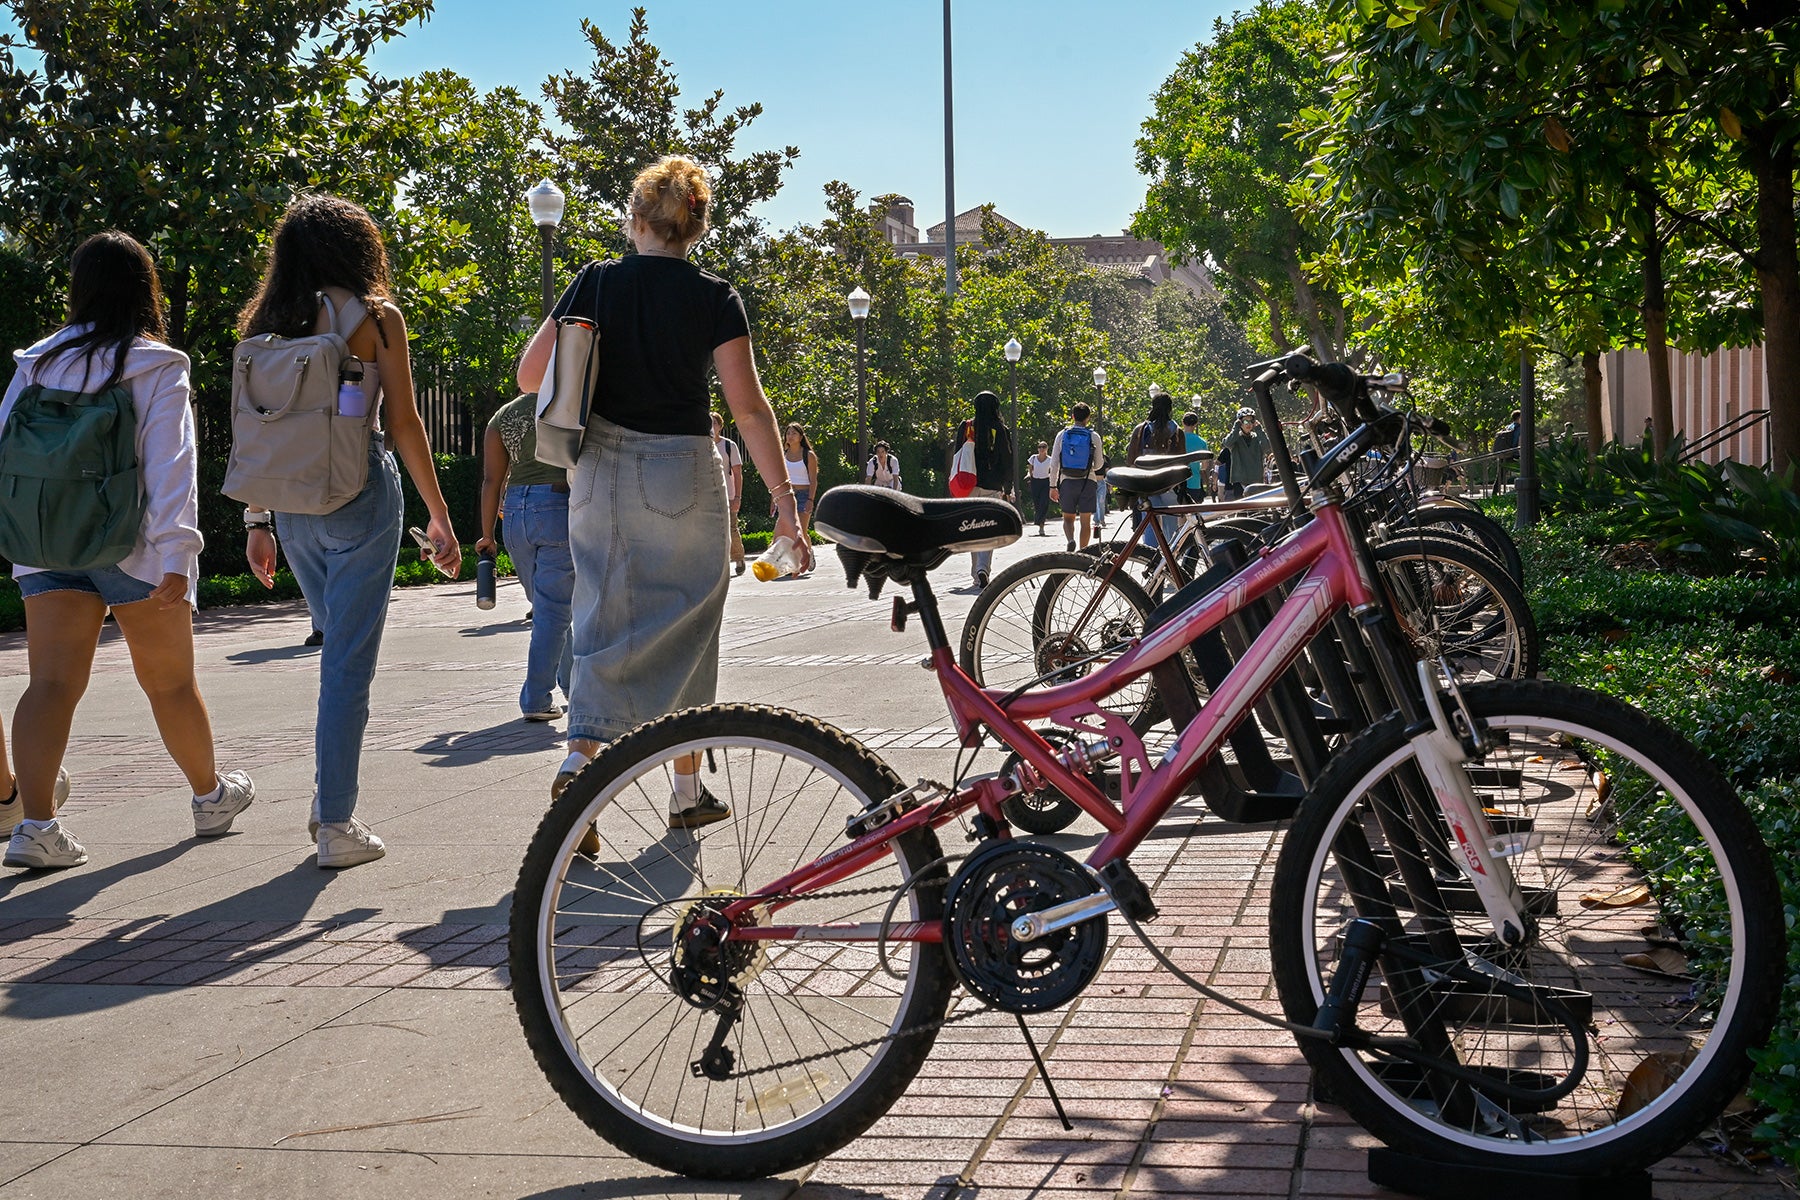 USC campus photos: Busy bike rack